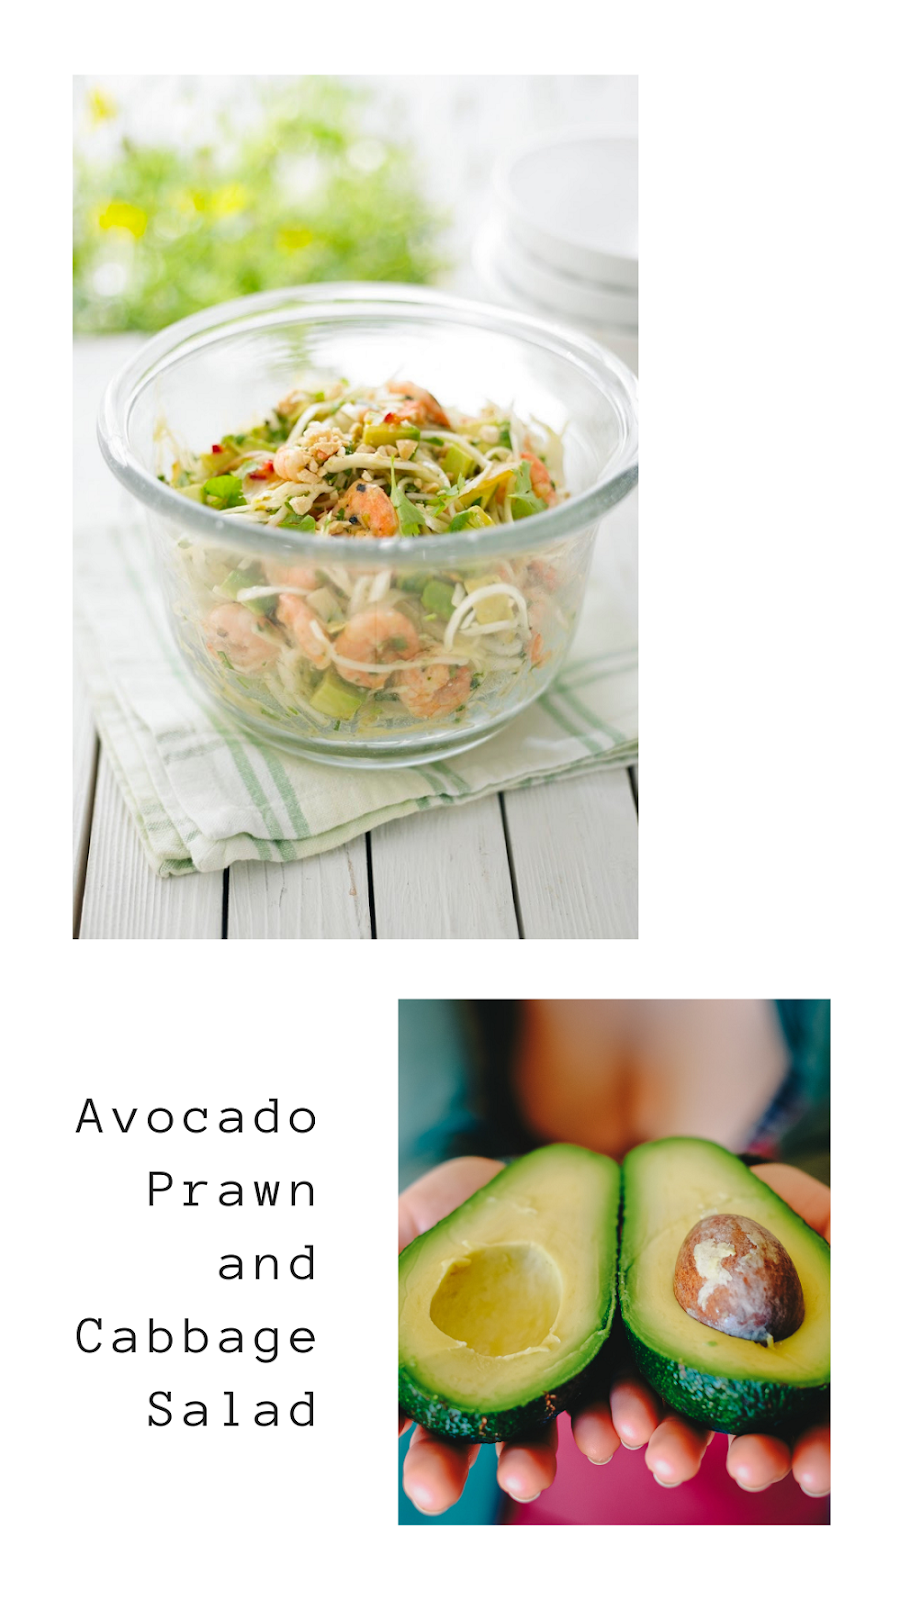 Avocado, Prawn and Cabbage Salad.